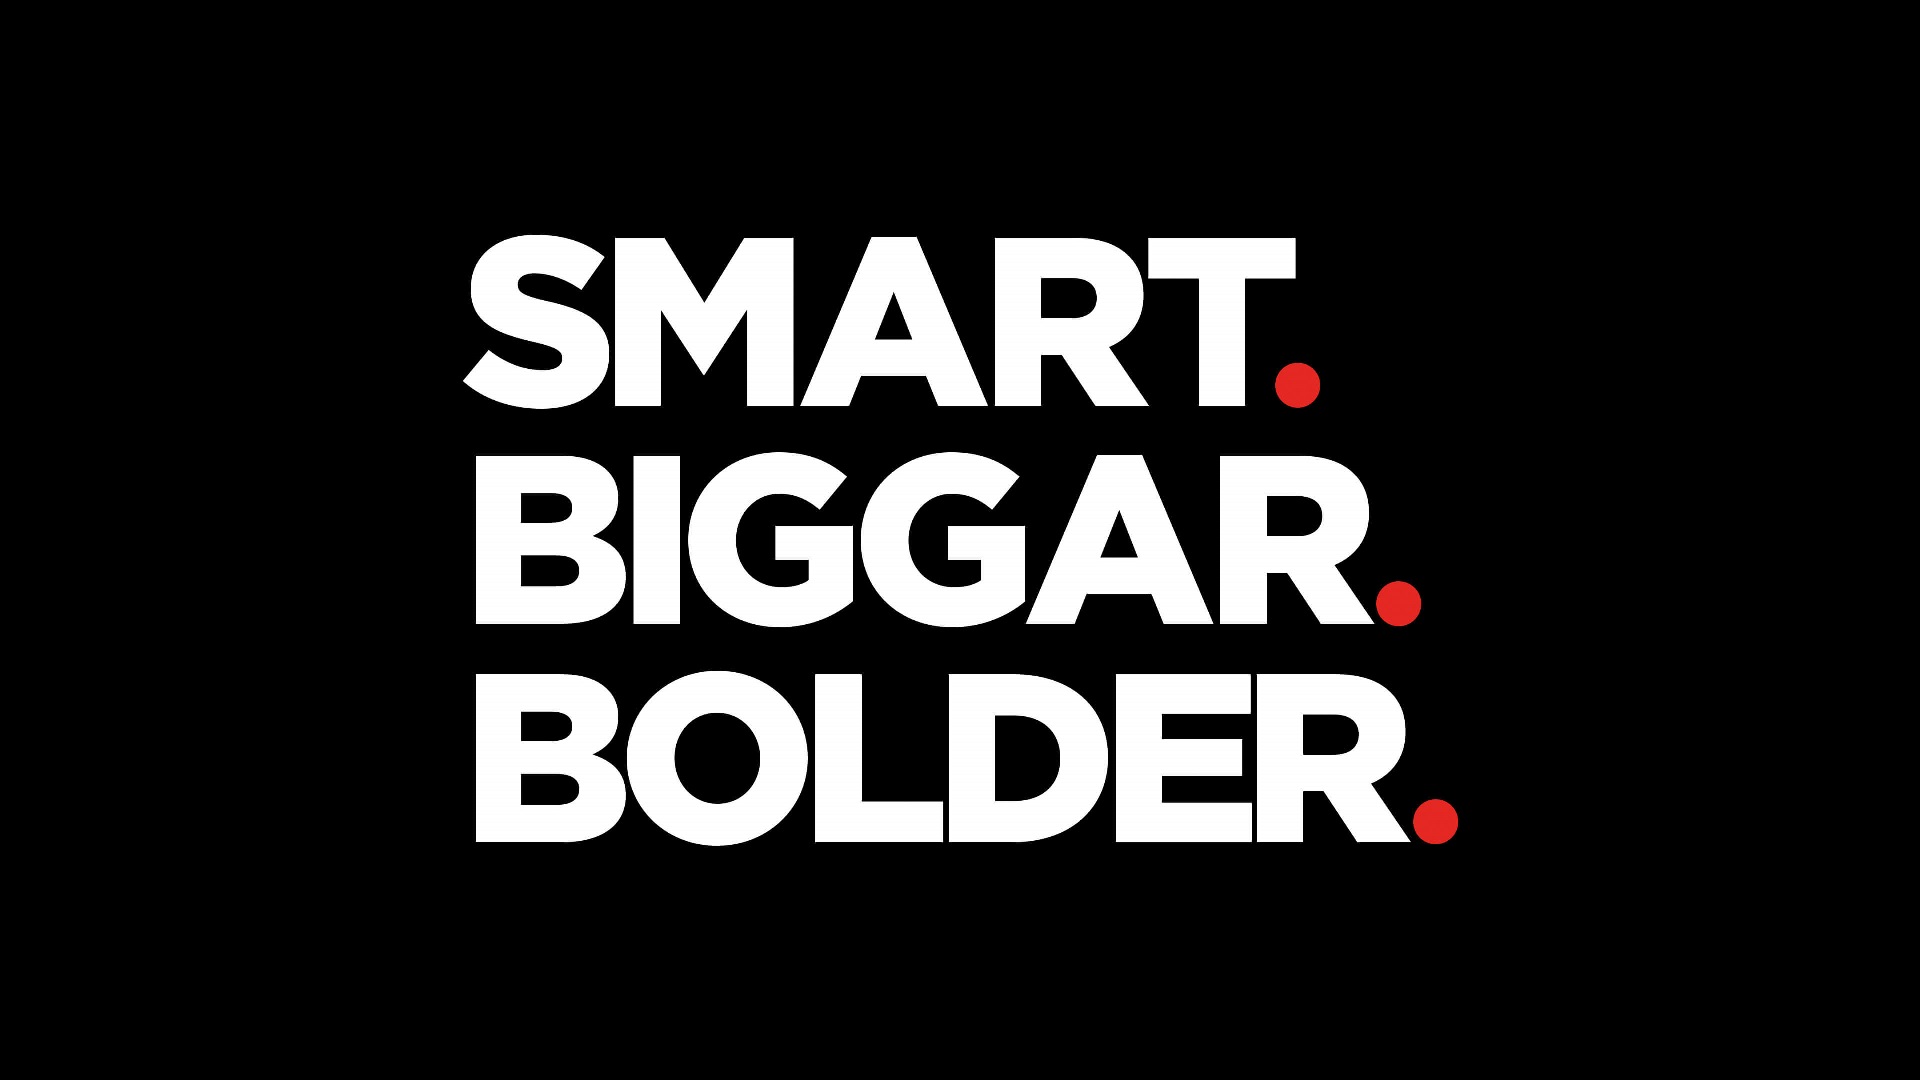 Smart Biggar_S B_Brand positioning and awareness campaign_Headlines_01 - Link to Smart & Biggar